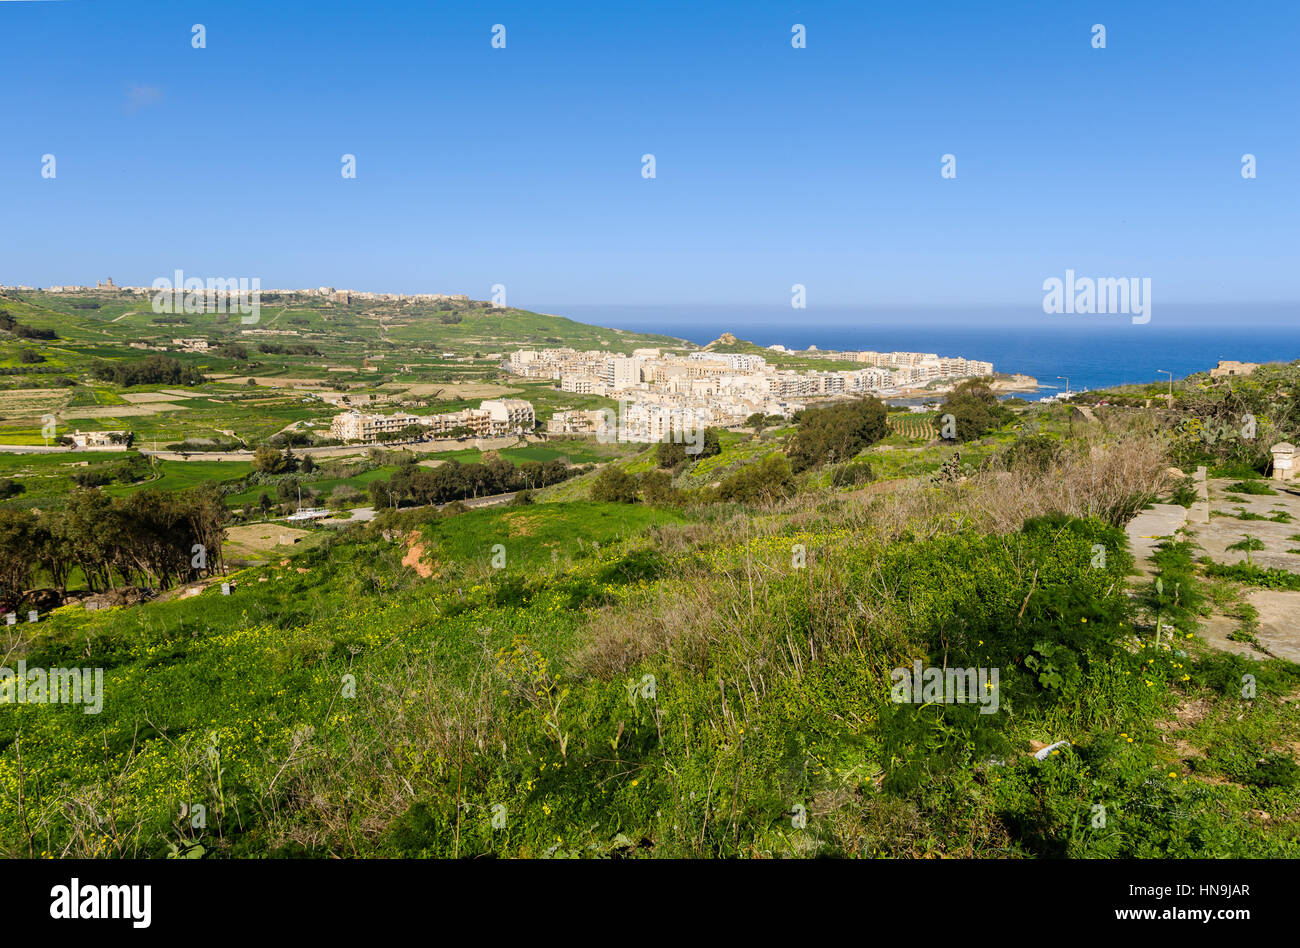 Views over Marsalforn and the Gozitan countryside - Malta Stock Photo